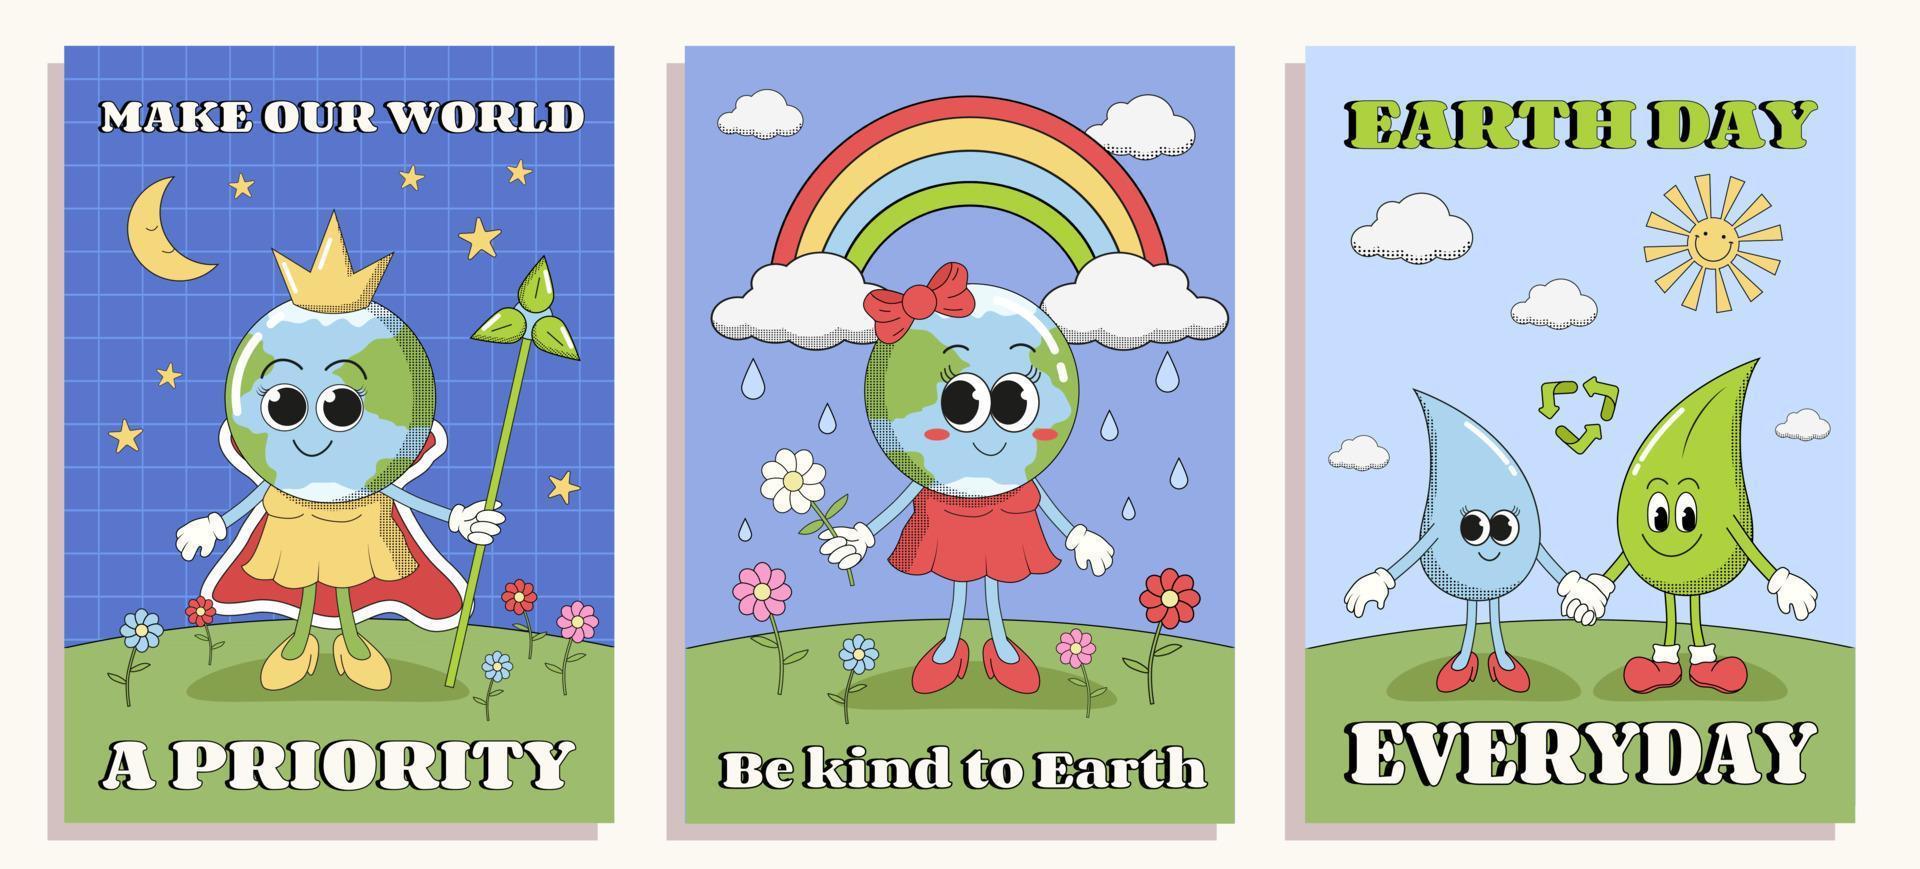 Erde Tag Poster, Ökologie Plakate mit groovig retro Figuren, speichern Erde Planet Plakate im groovig Stil. vektor